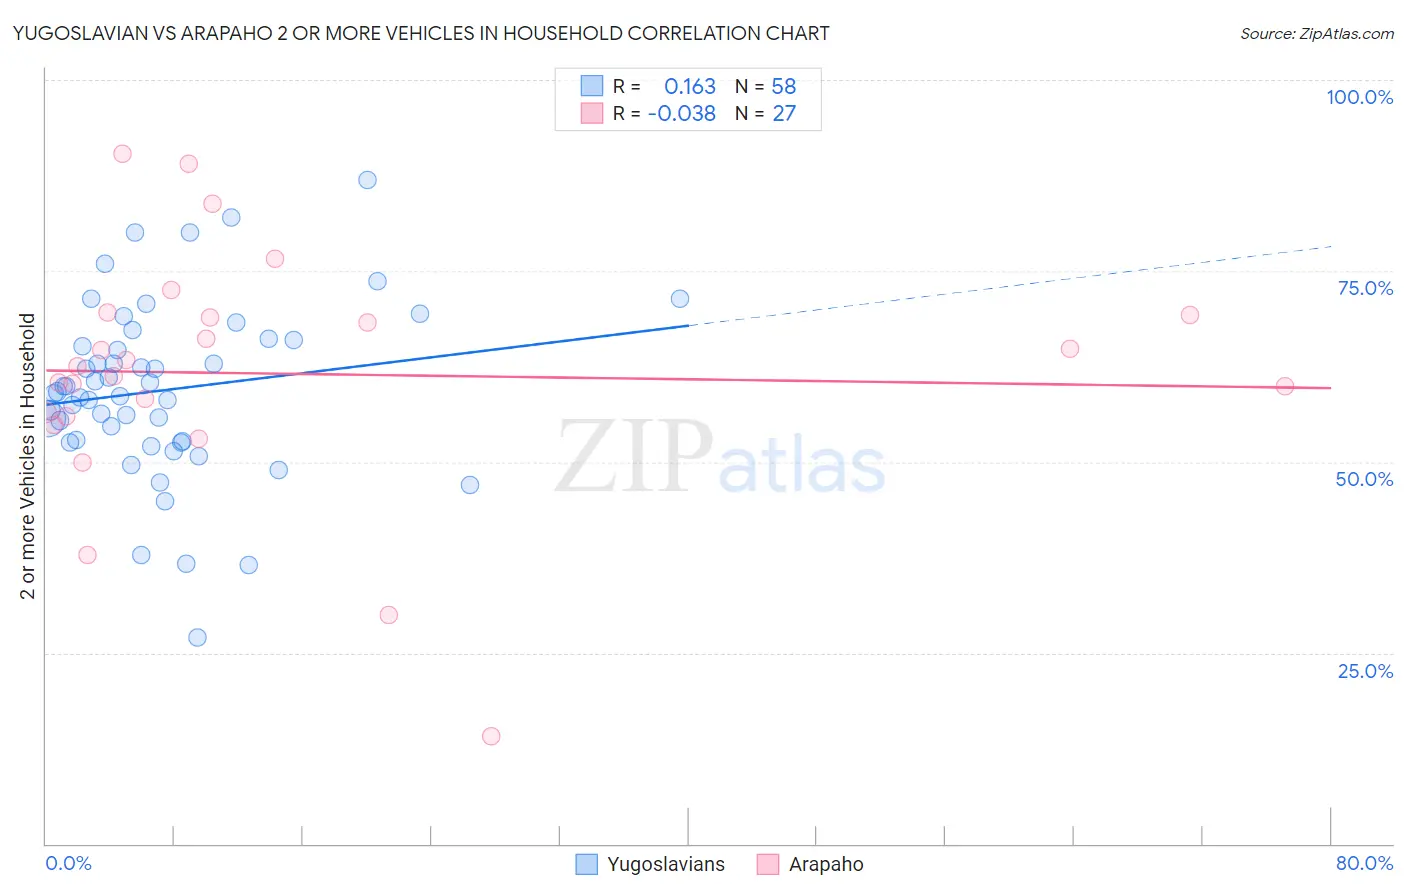 Yugoslavian vs Arapaho 2 or more Vehicles in Household